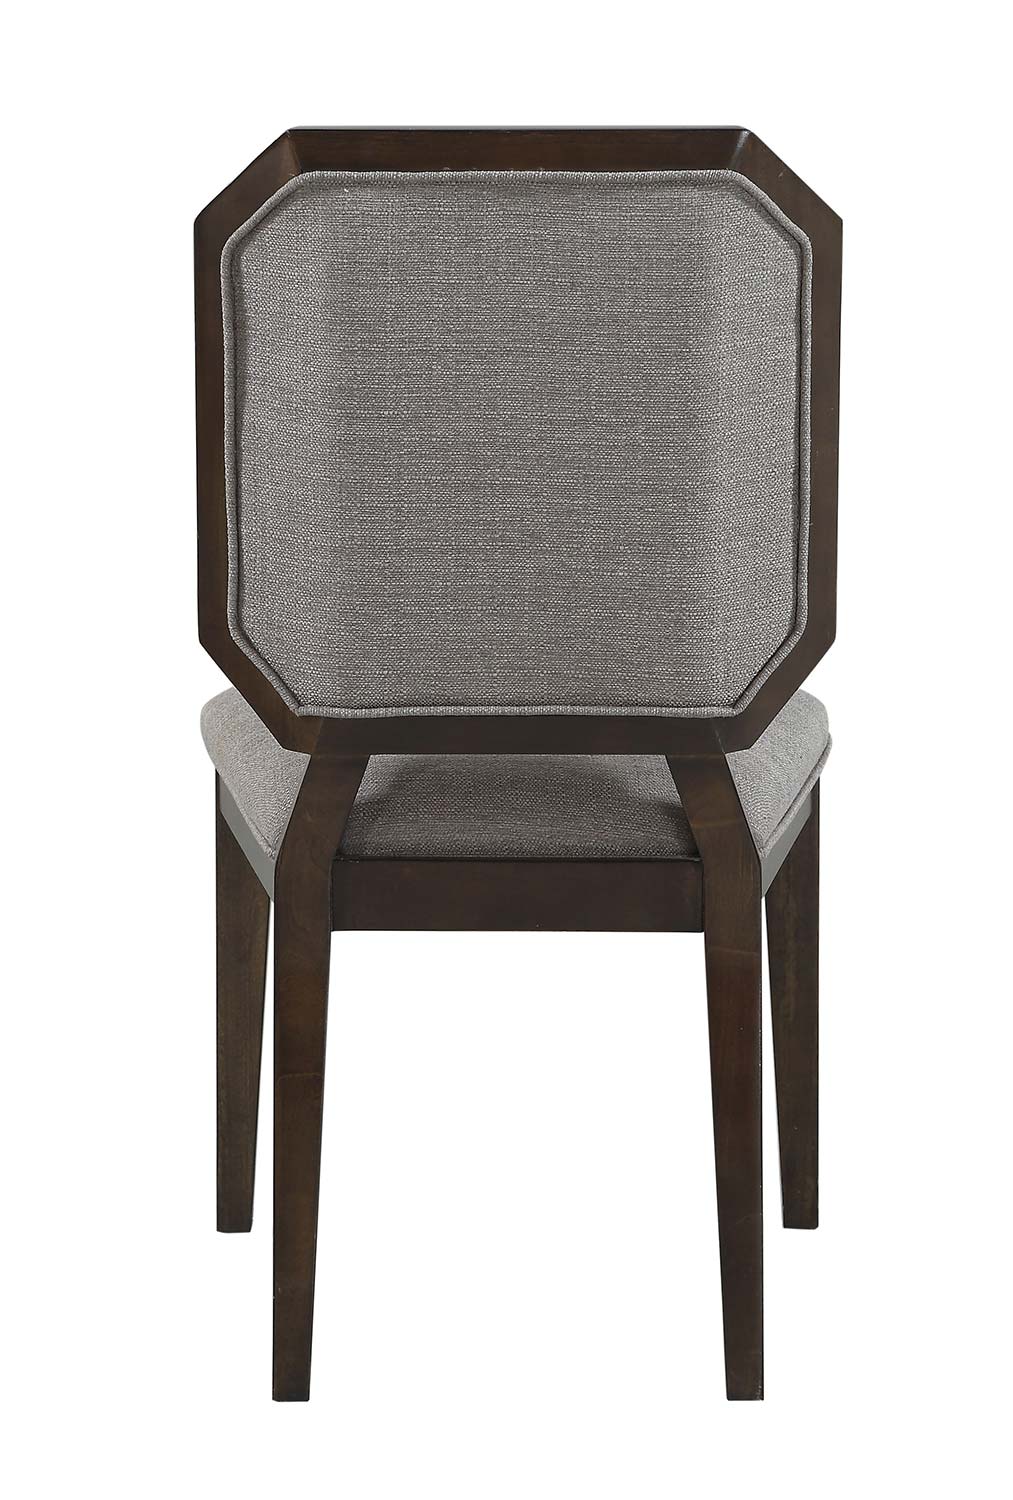 Acme Selma Side Chair - Gray Fabric/Tobacco